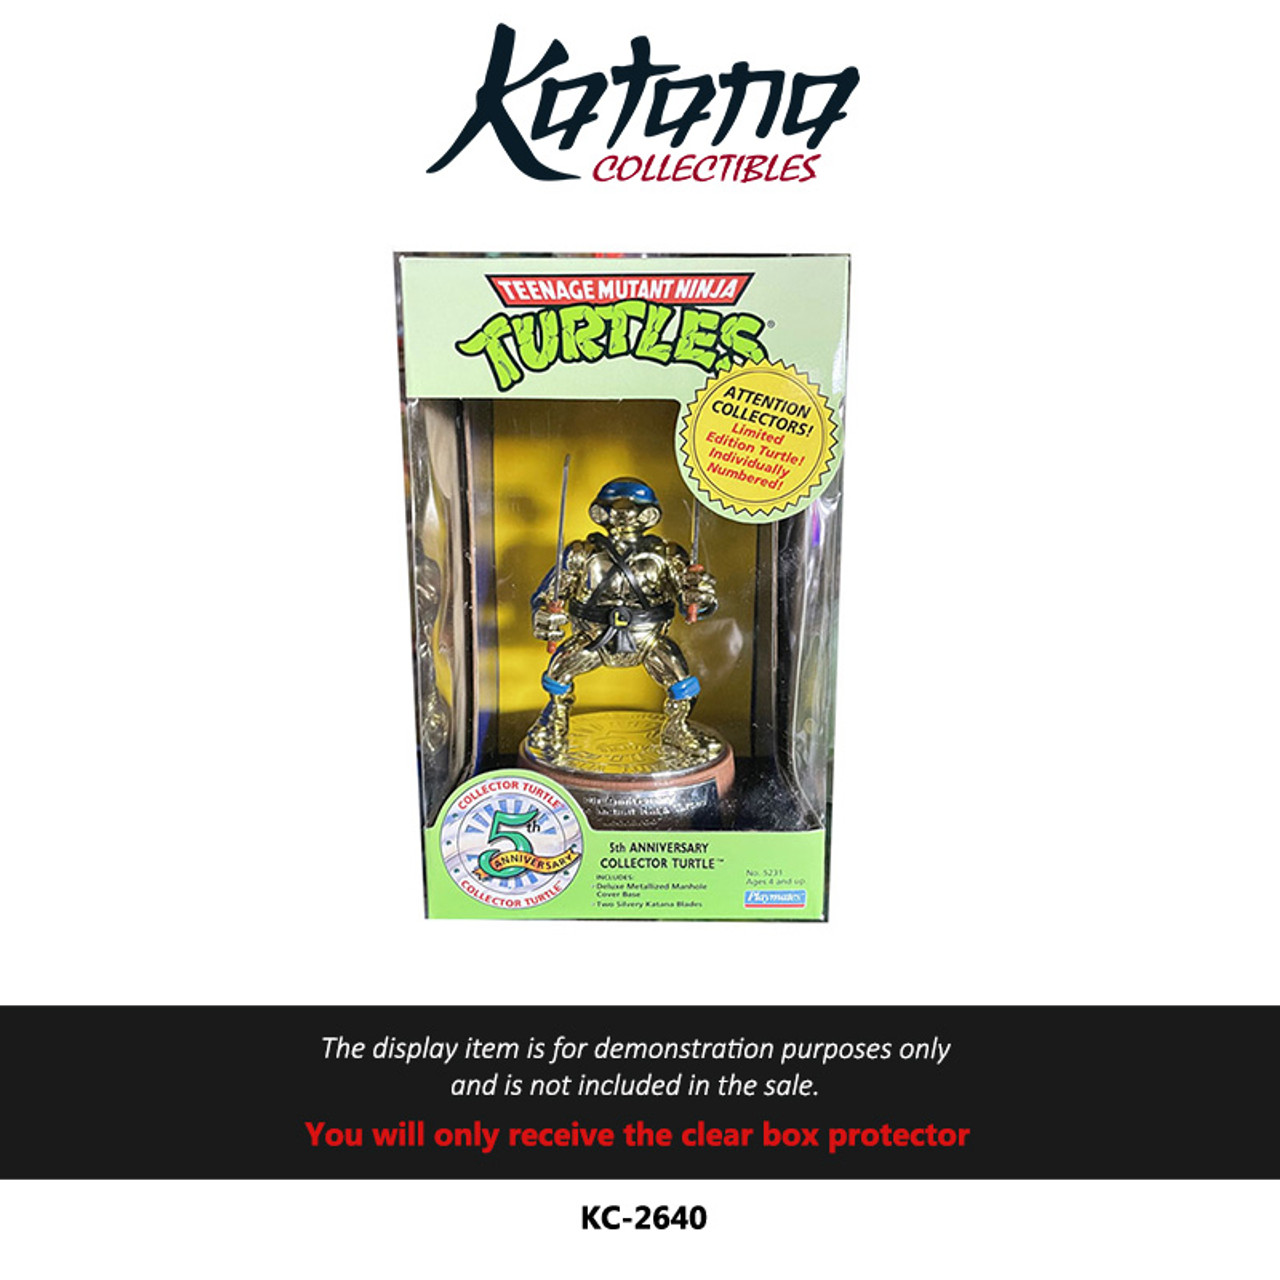 Katana Collectibles Protector For Playmates Teenage Mutant Ninja Turtles Gold Turtle Statue